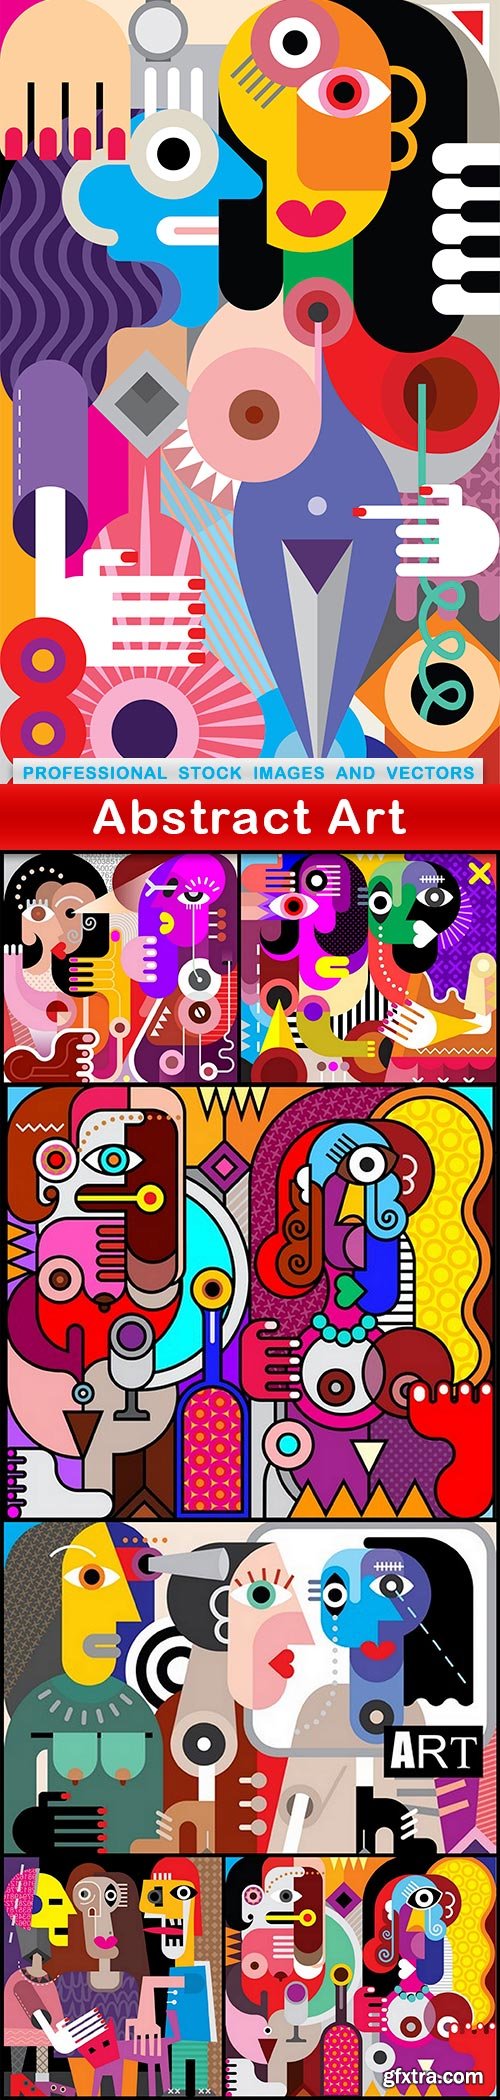 Abstract Art - 7 EPS